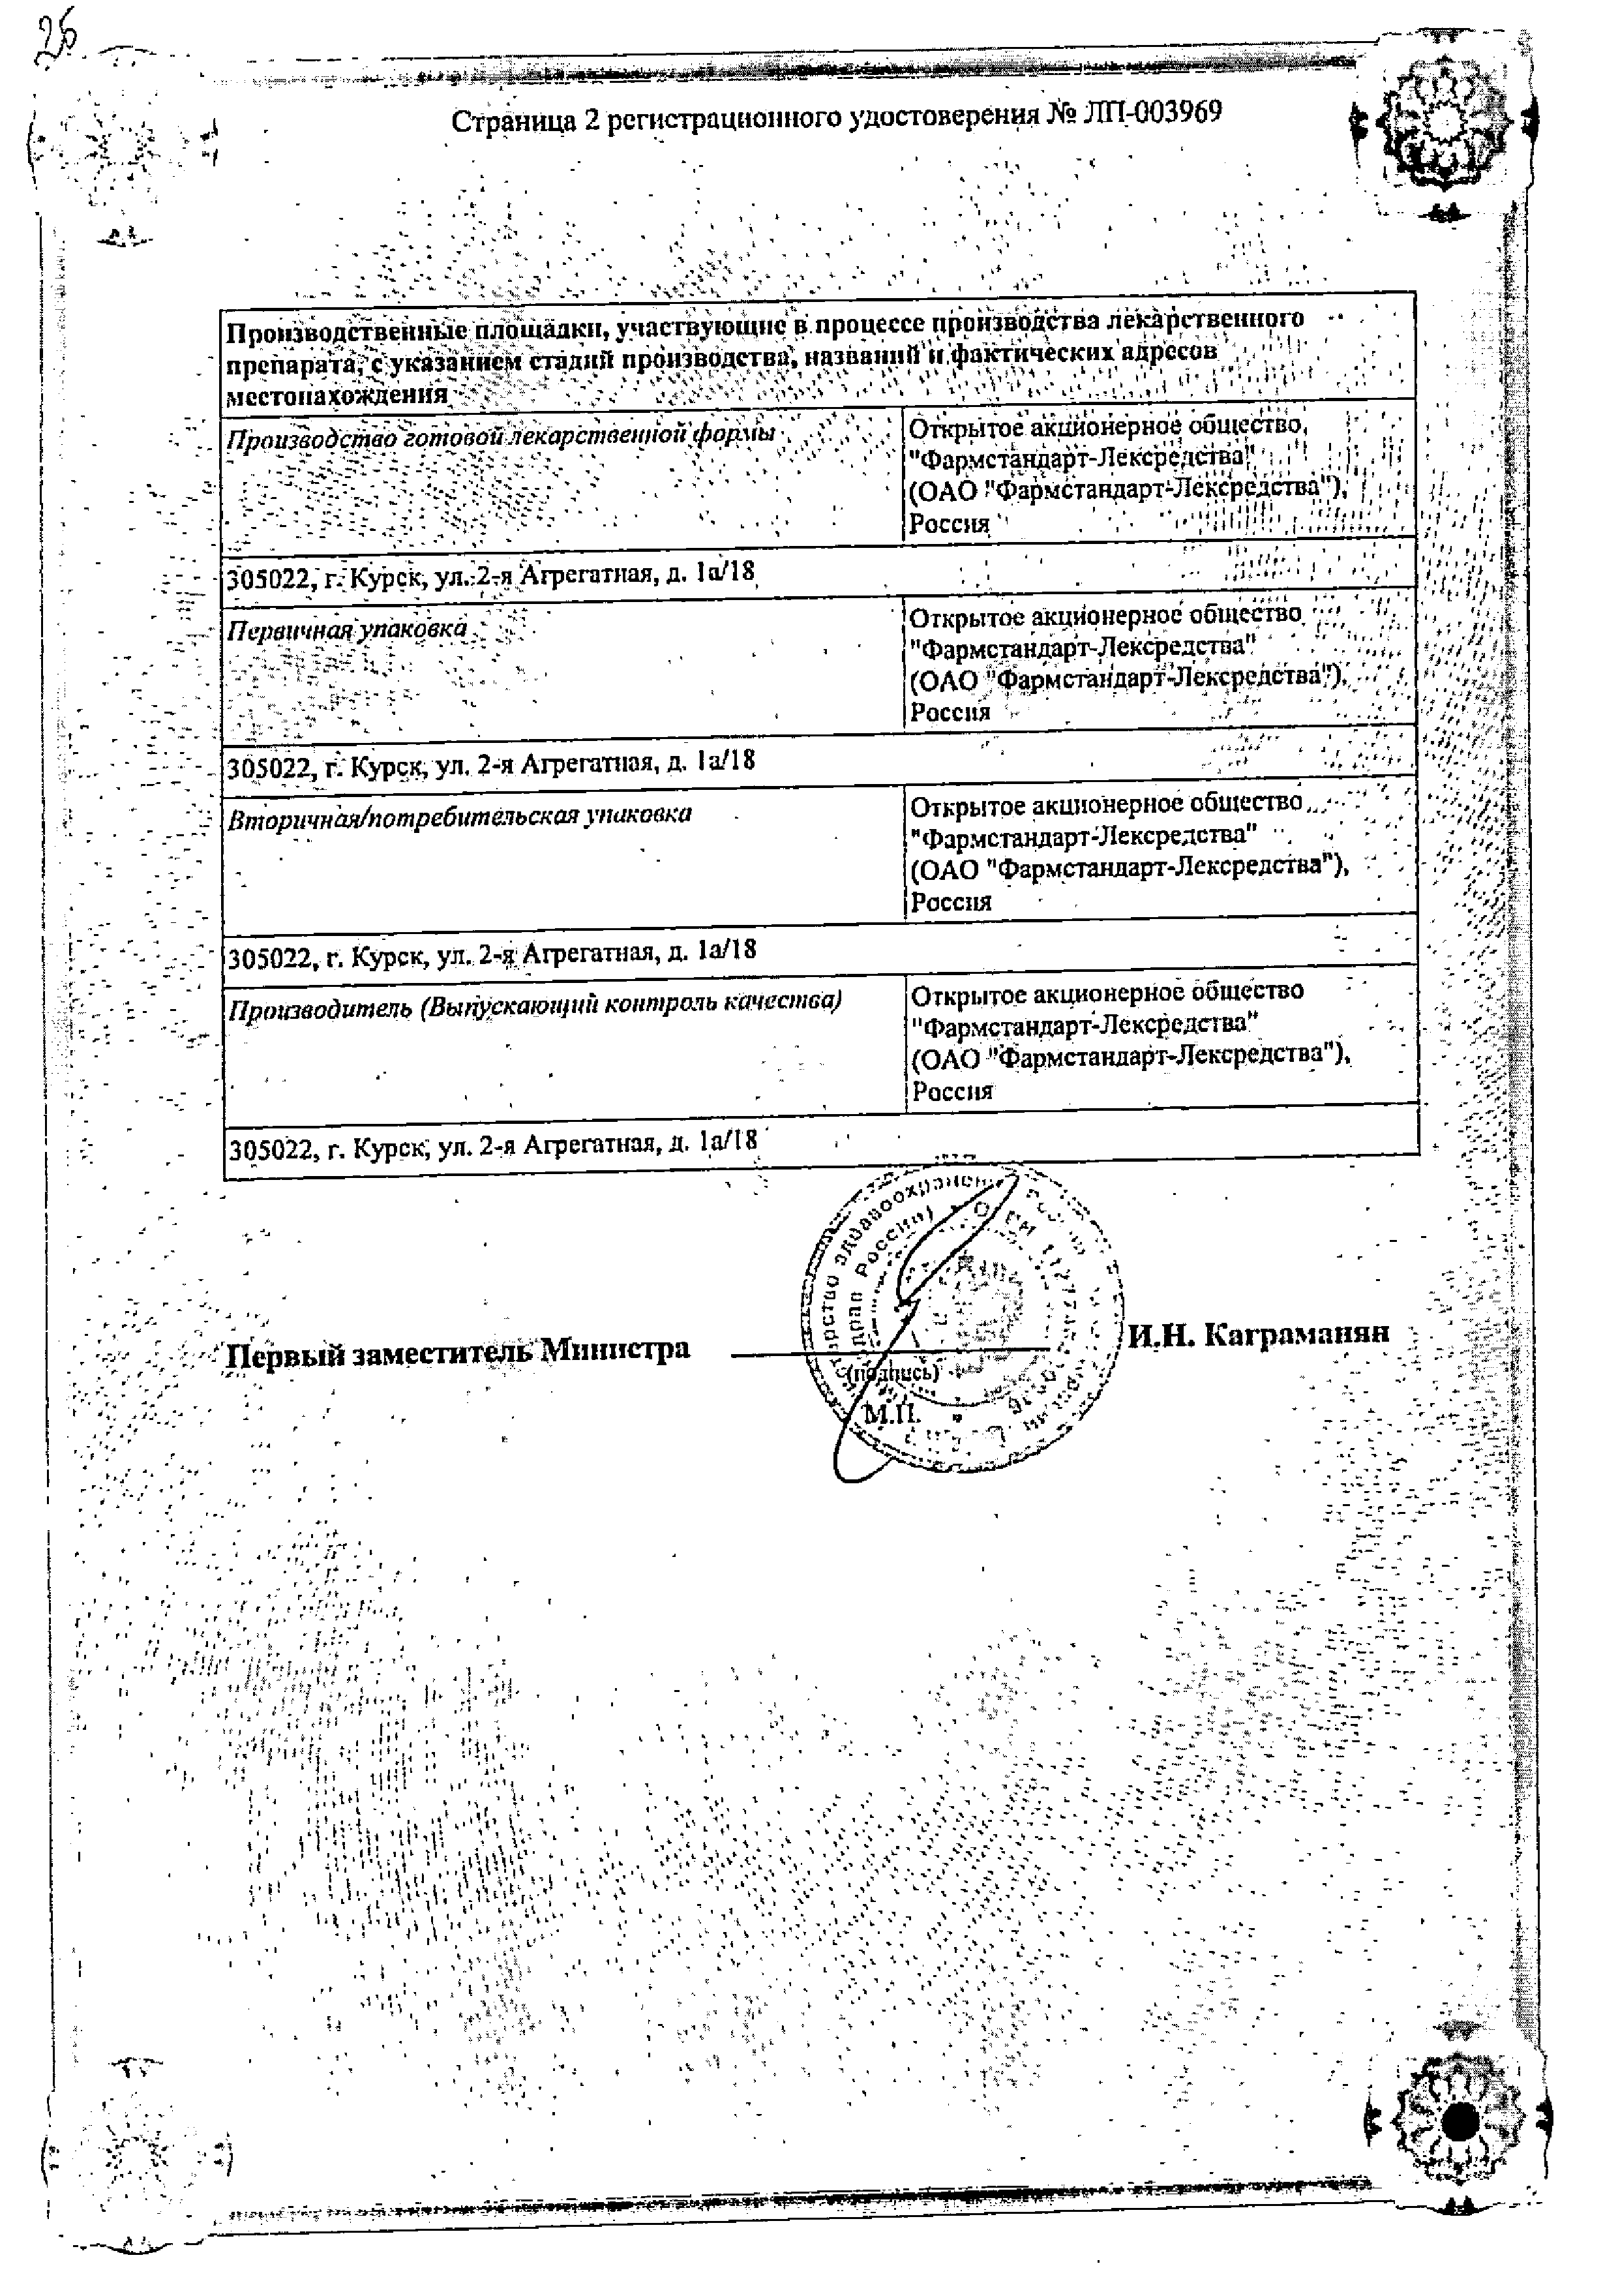 Корвалол Фито сертификат